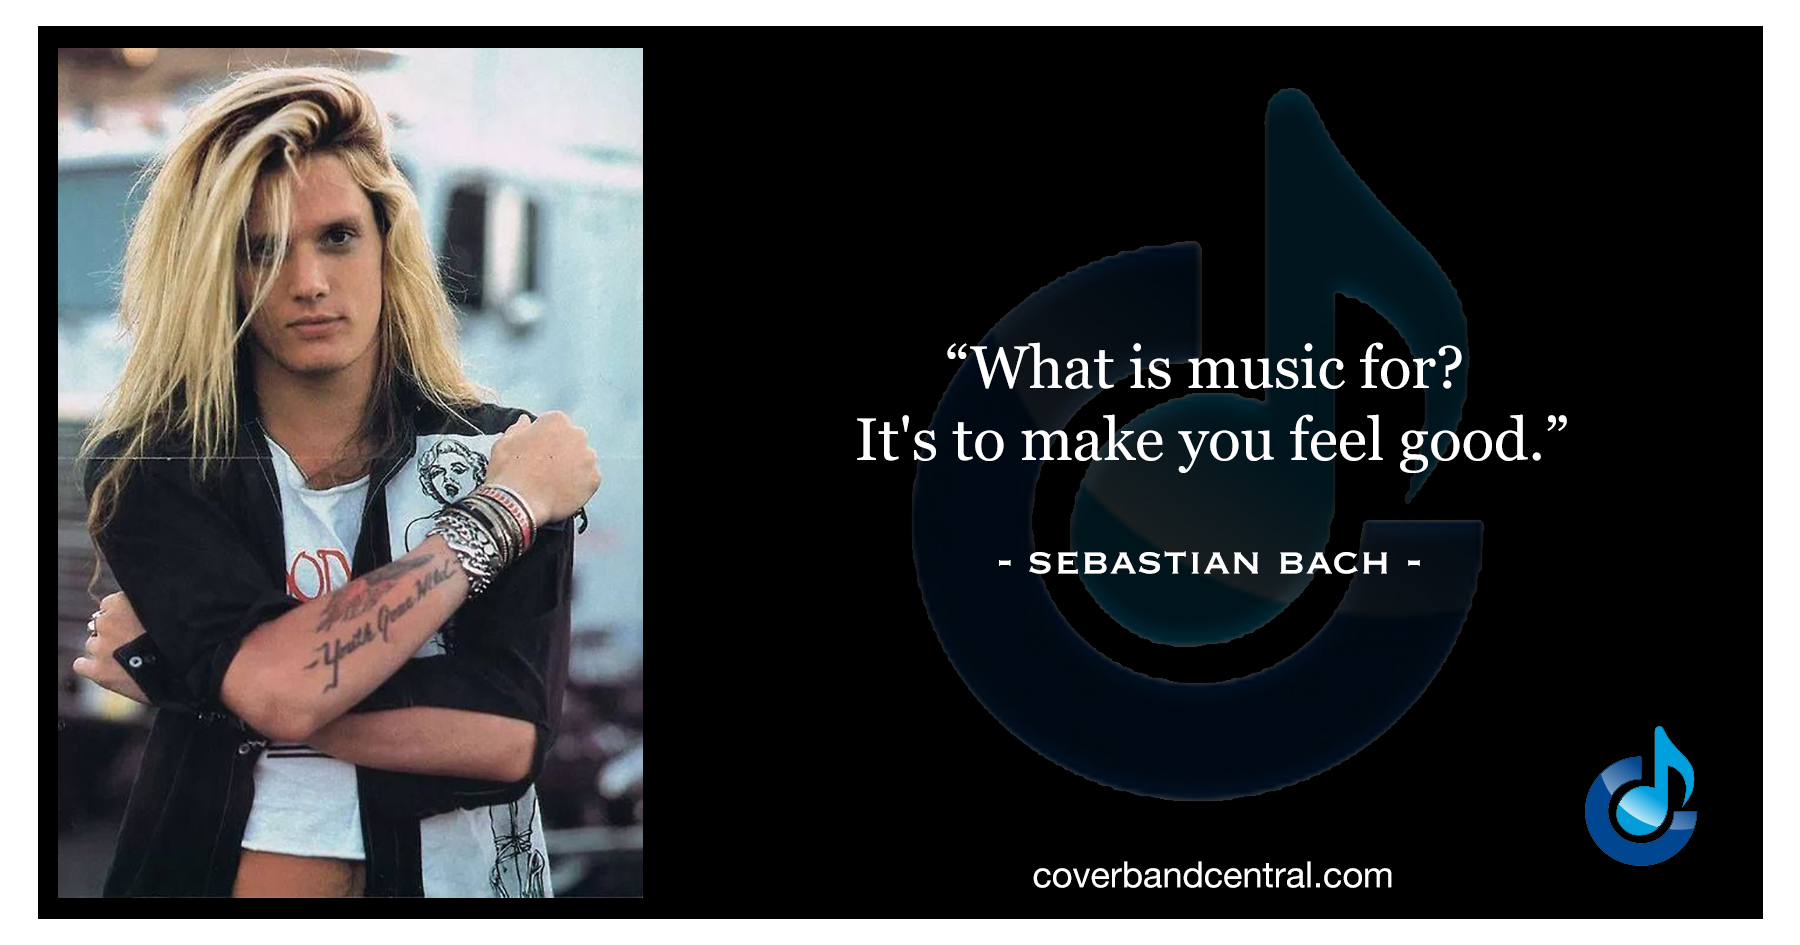 Sebastian Bach quote